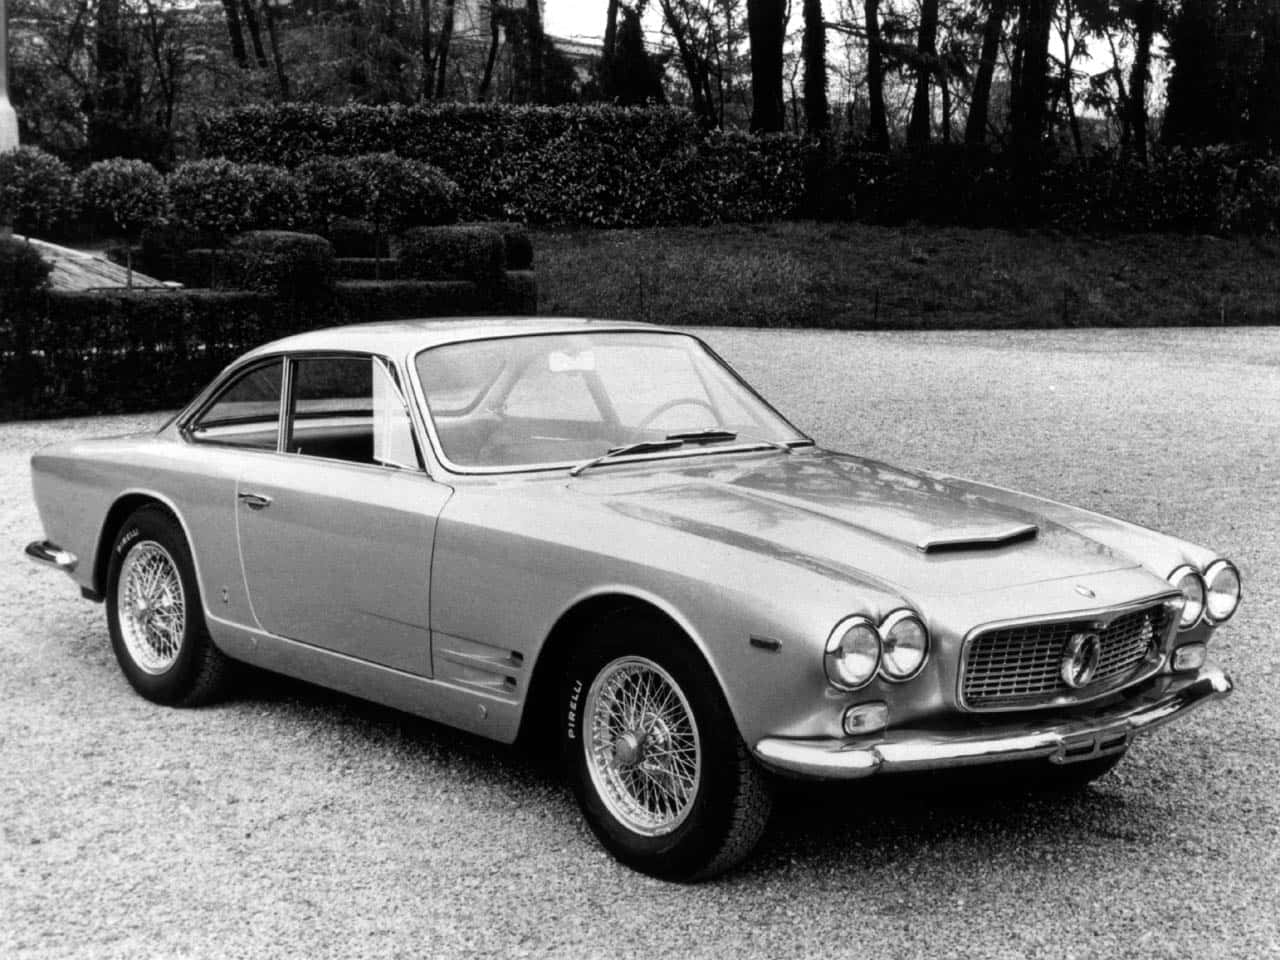 The Classic Italian Charm - Maserati Sebring Wallpaper